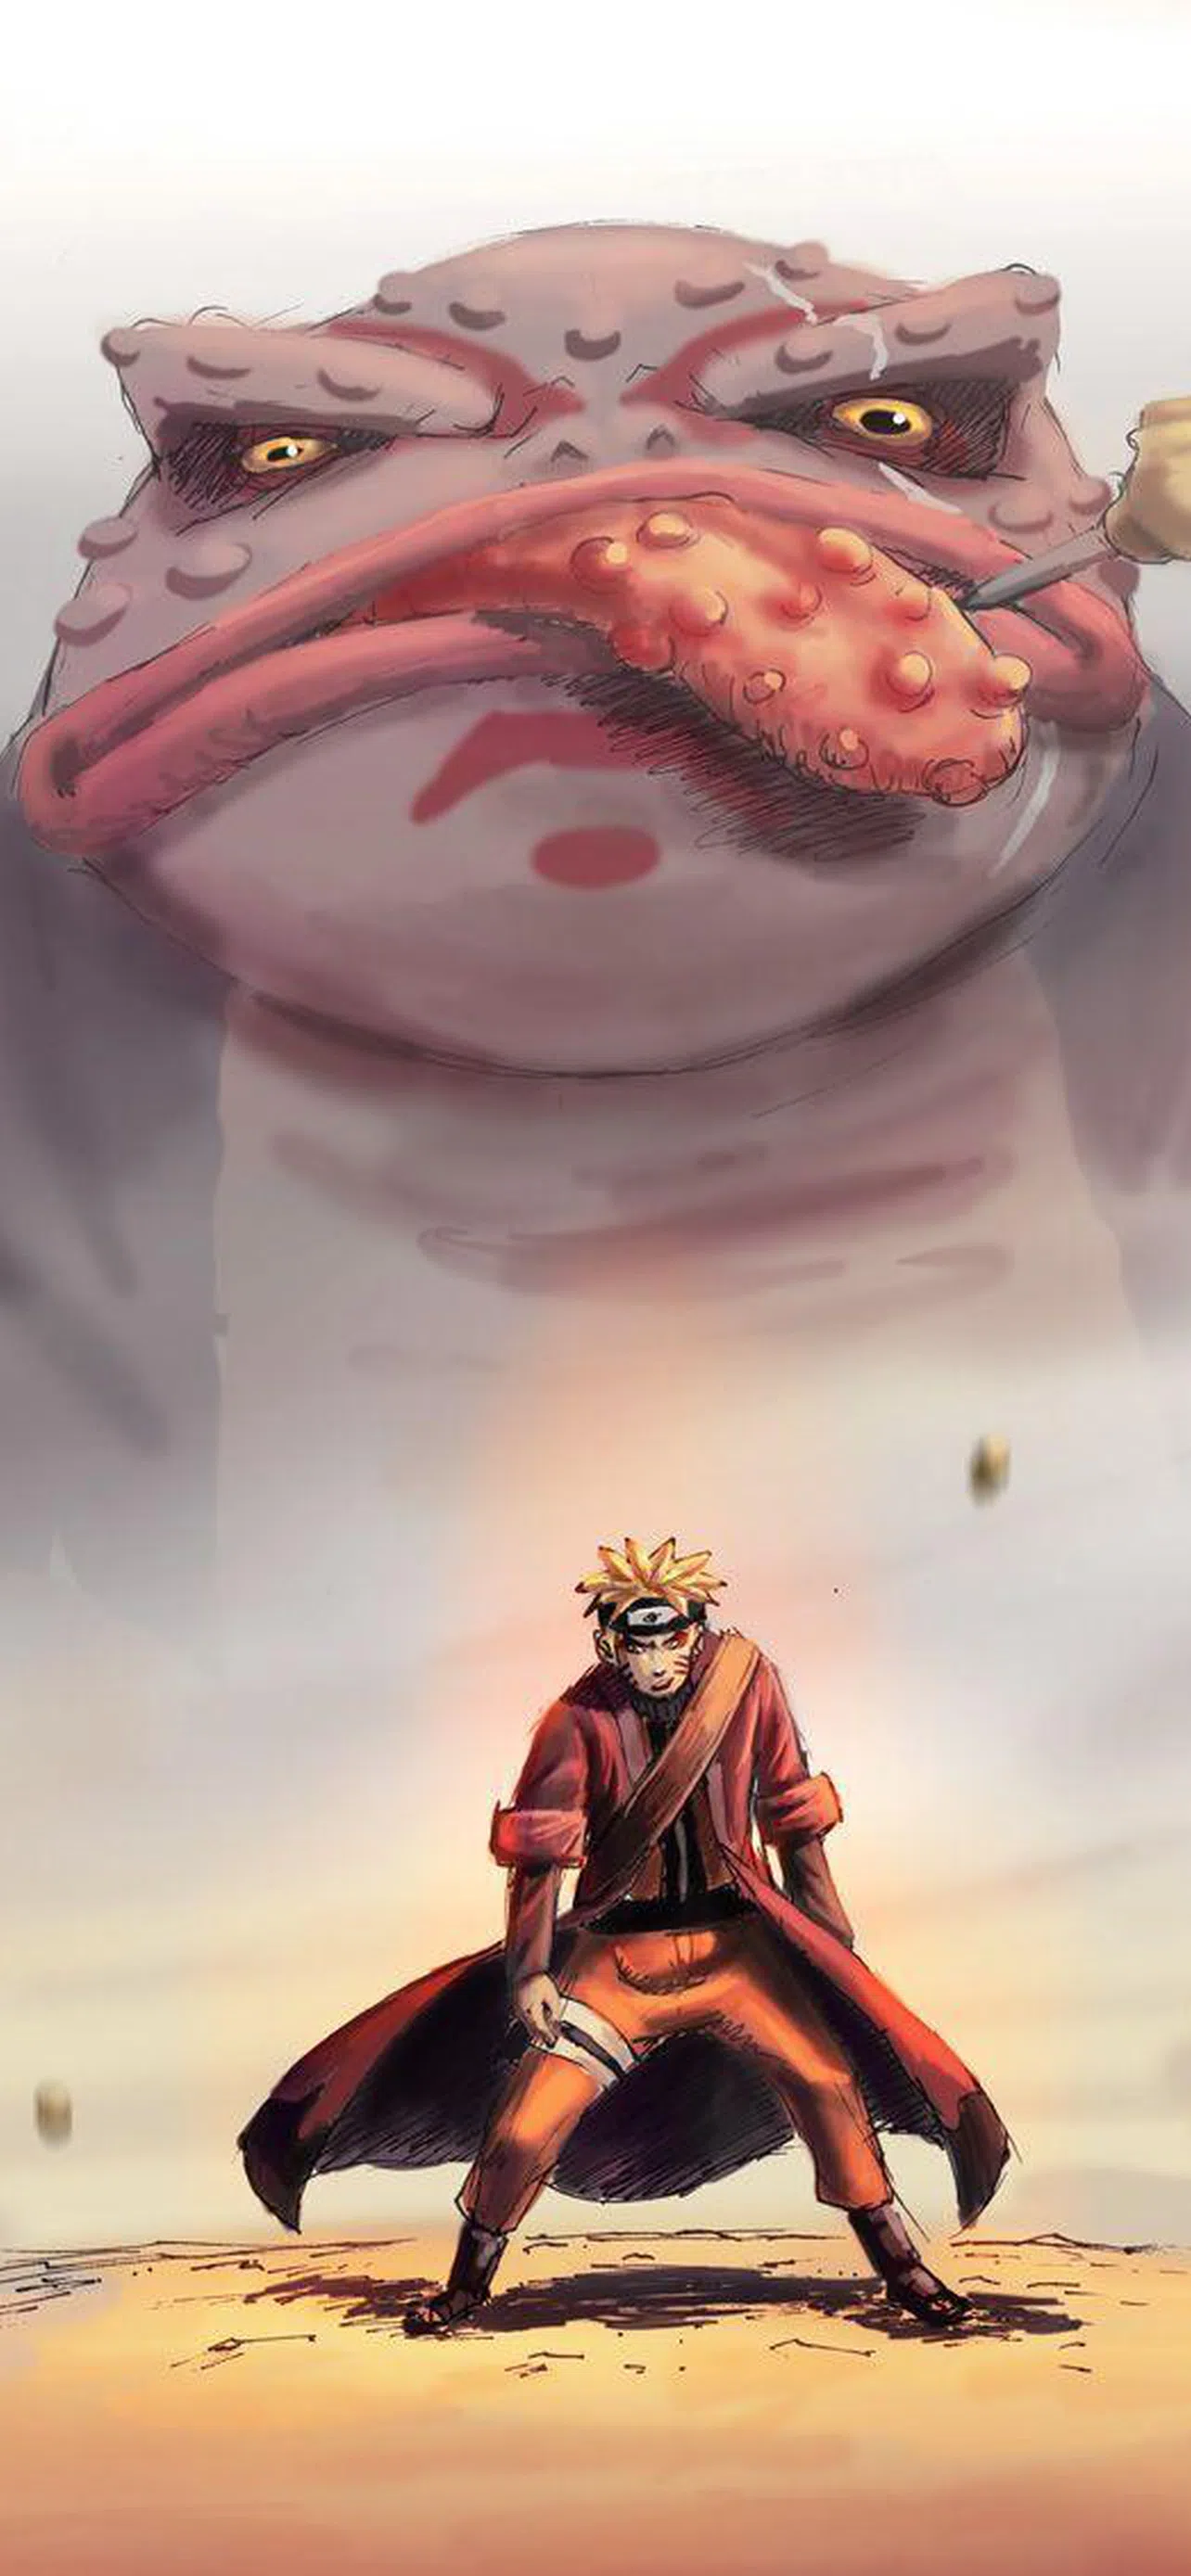 Naruto Sage Mode wallpaper by TrulyHyakki  Download on ZEDGE  af7a